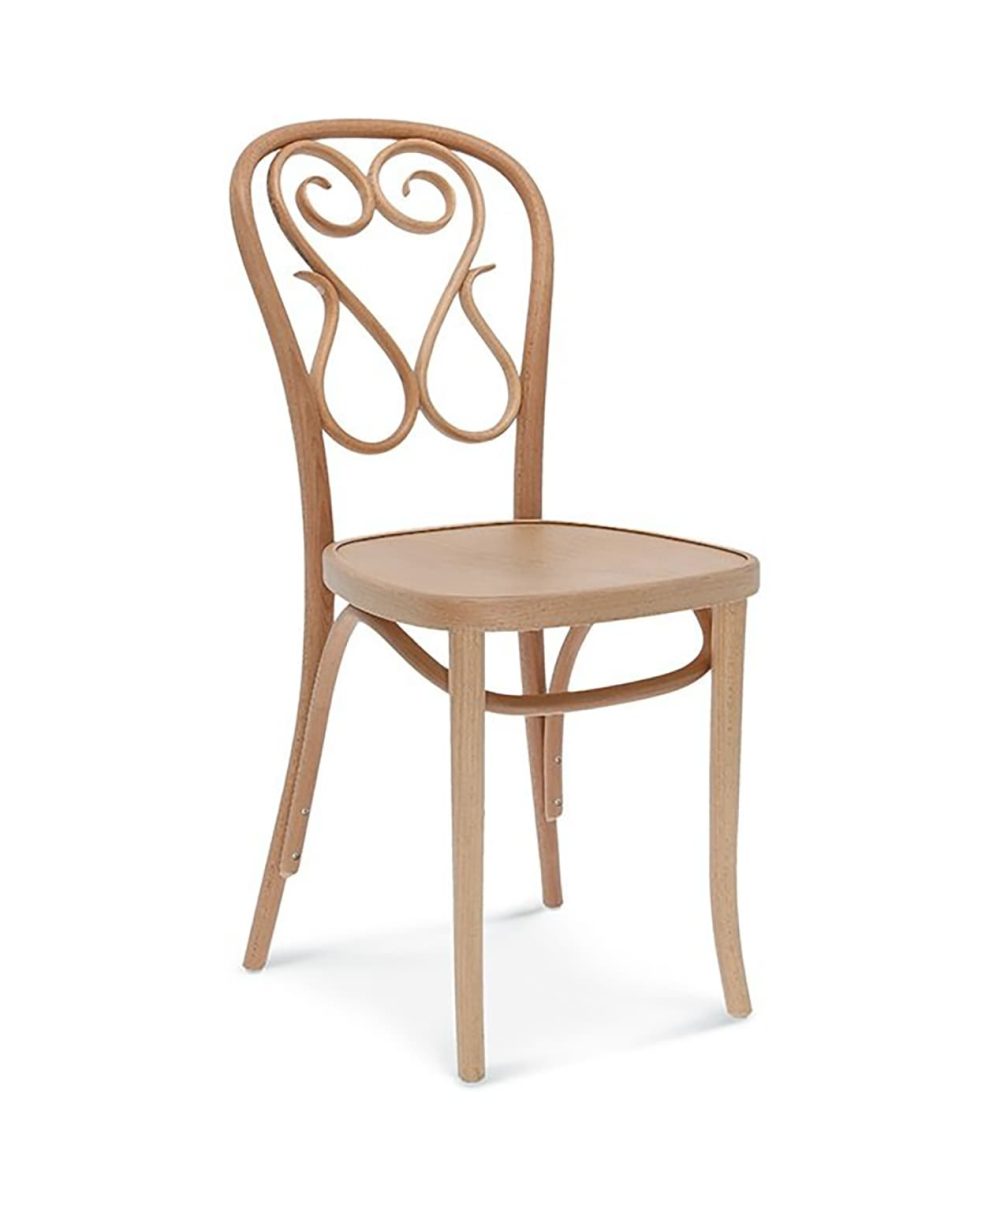 no4-chair-profile.jpg